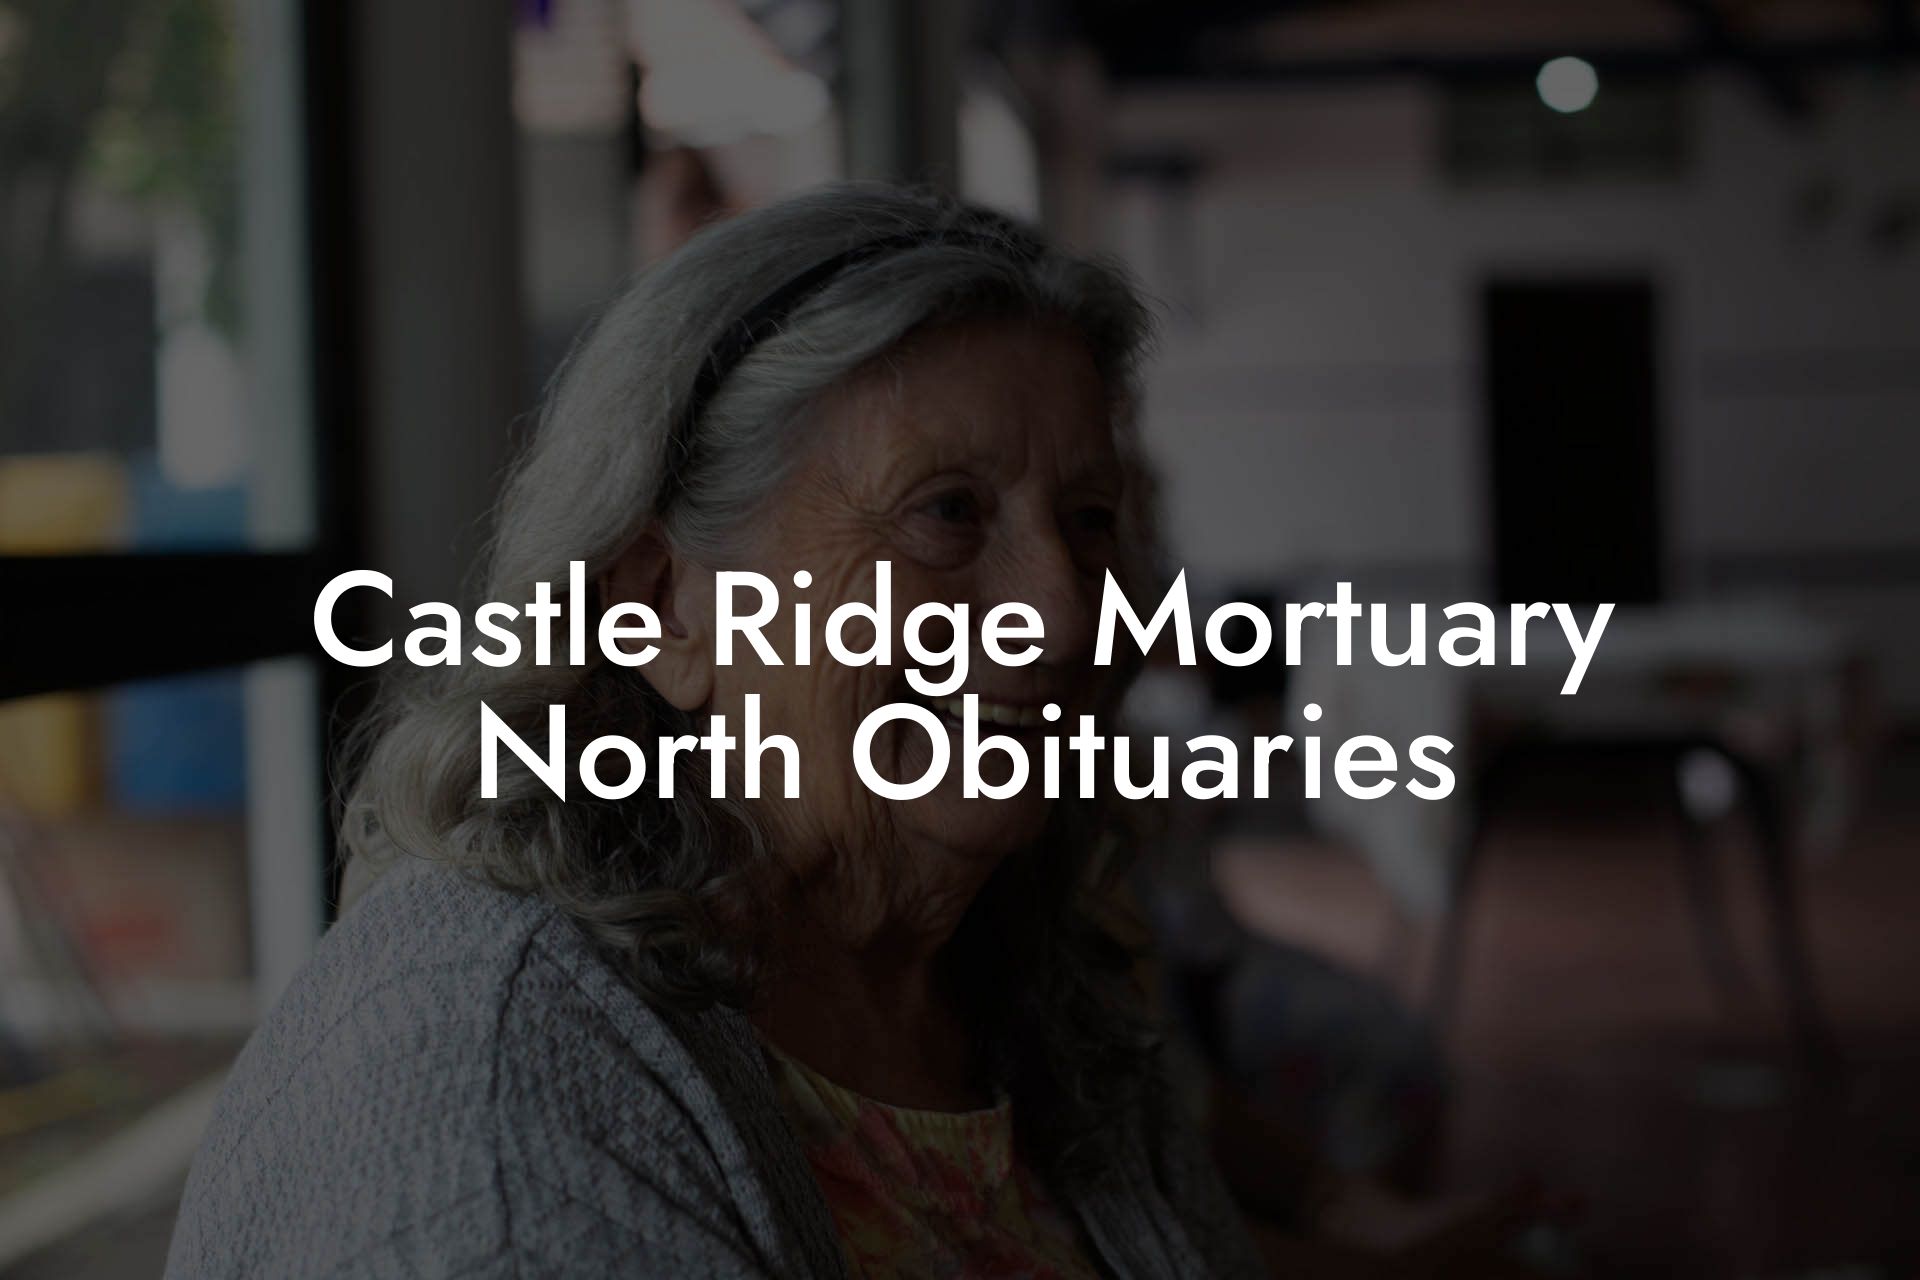 Castle Ridge Mortuary North Obituaries